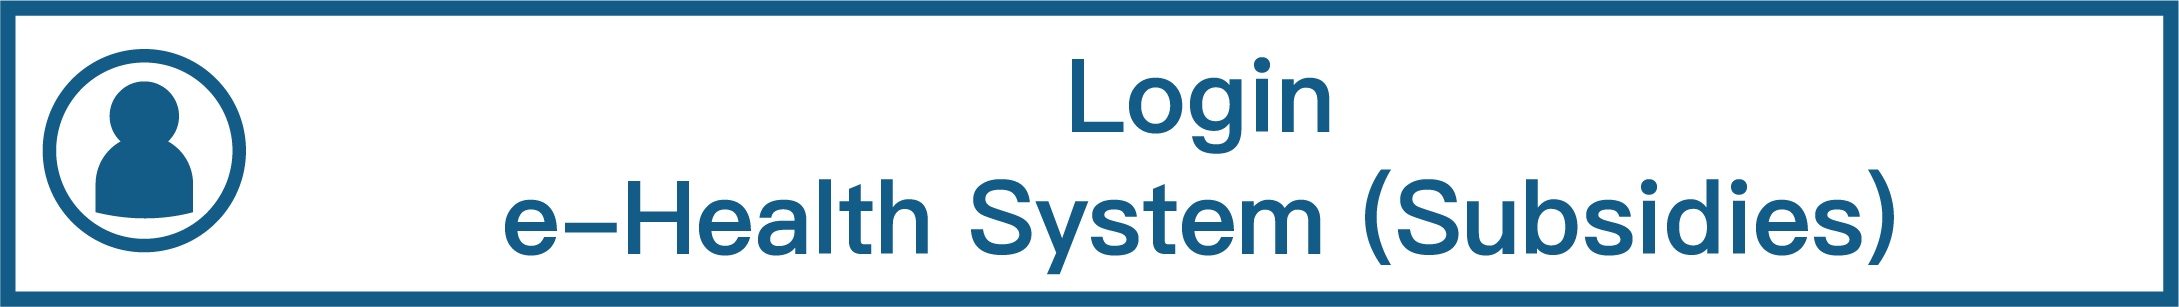 Login e-Health System (Subsidies)